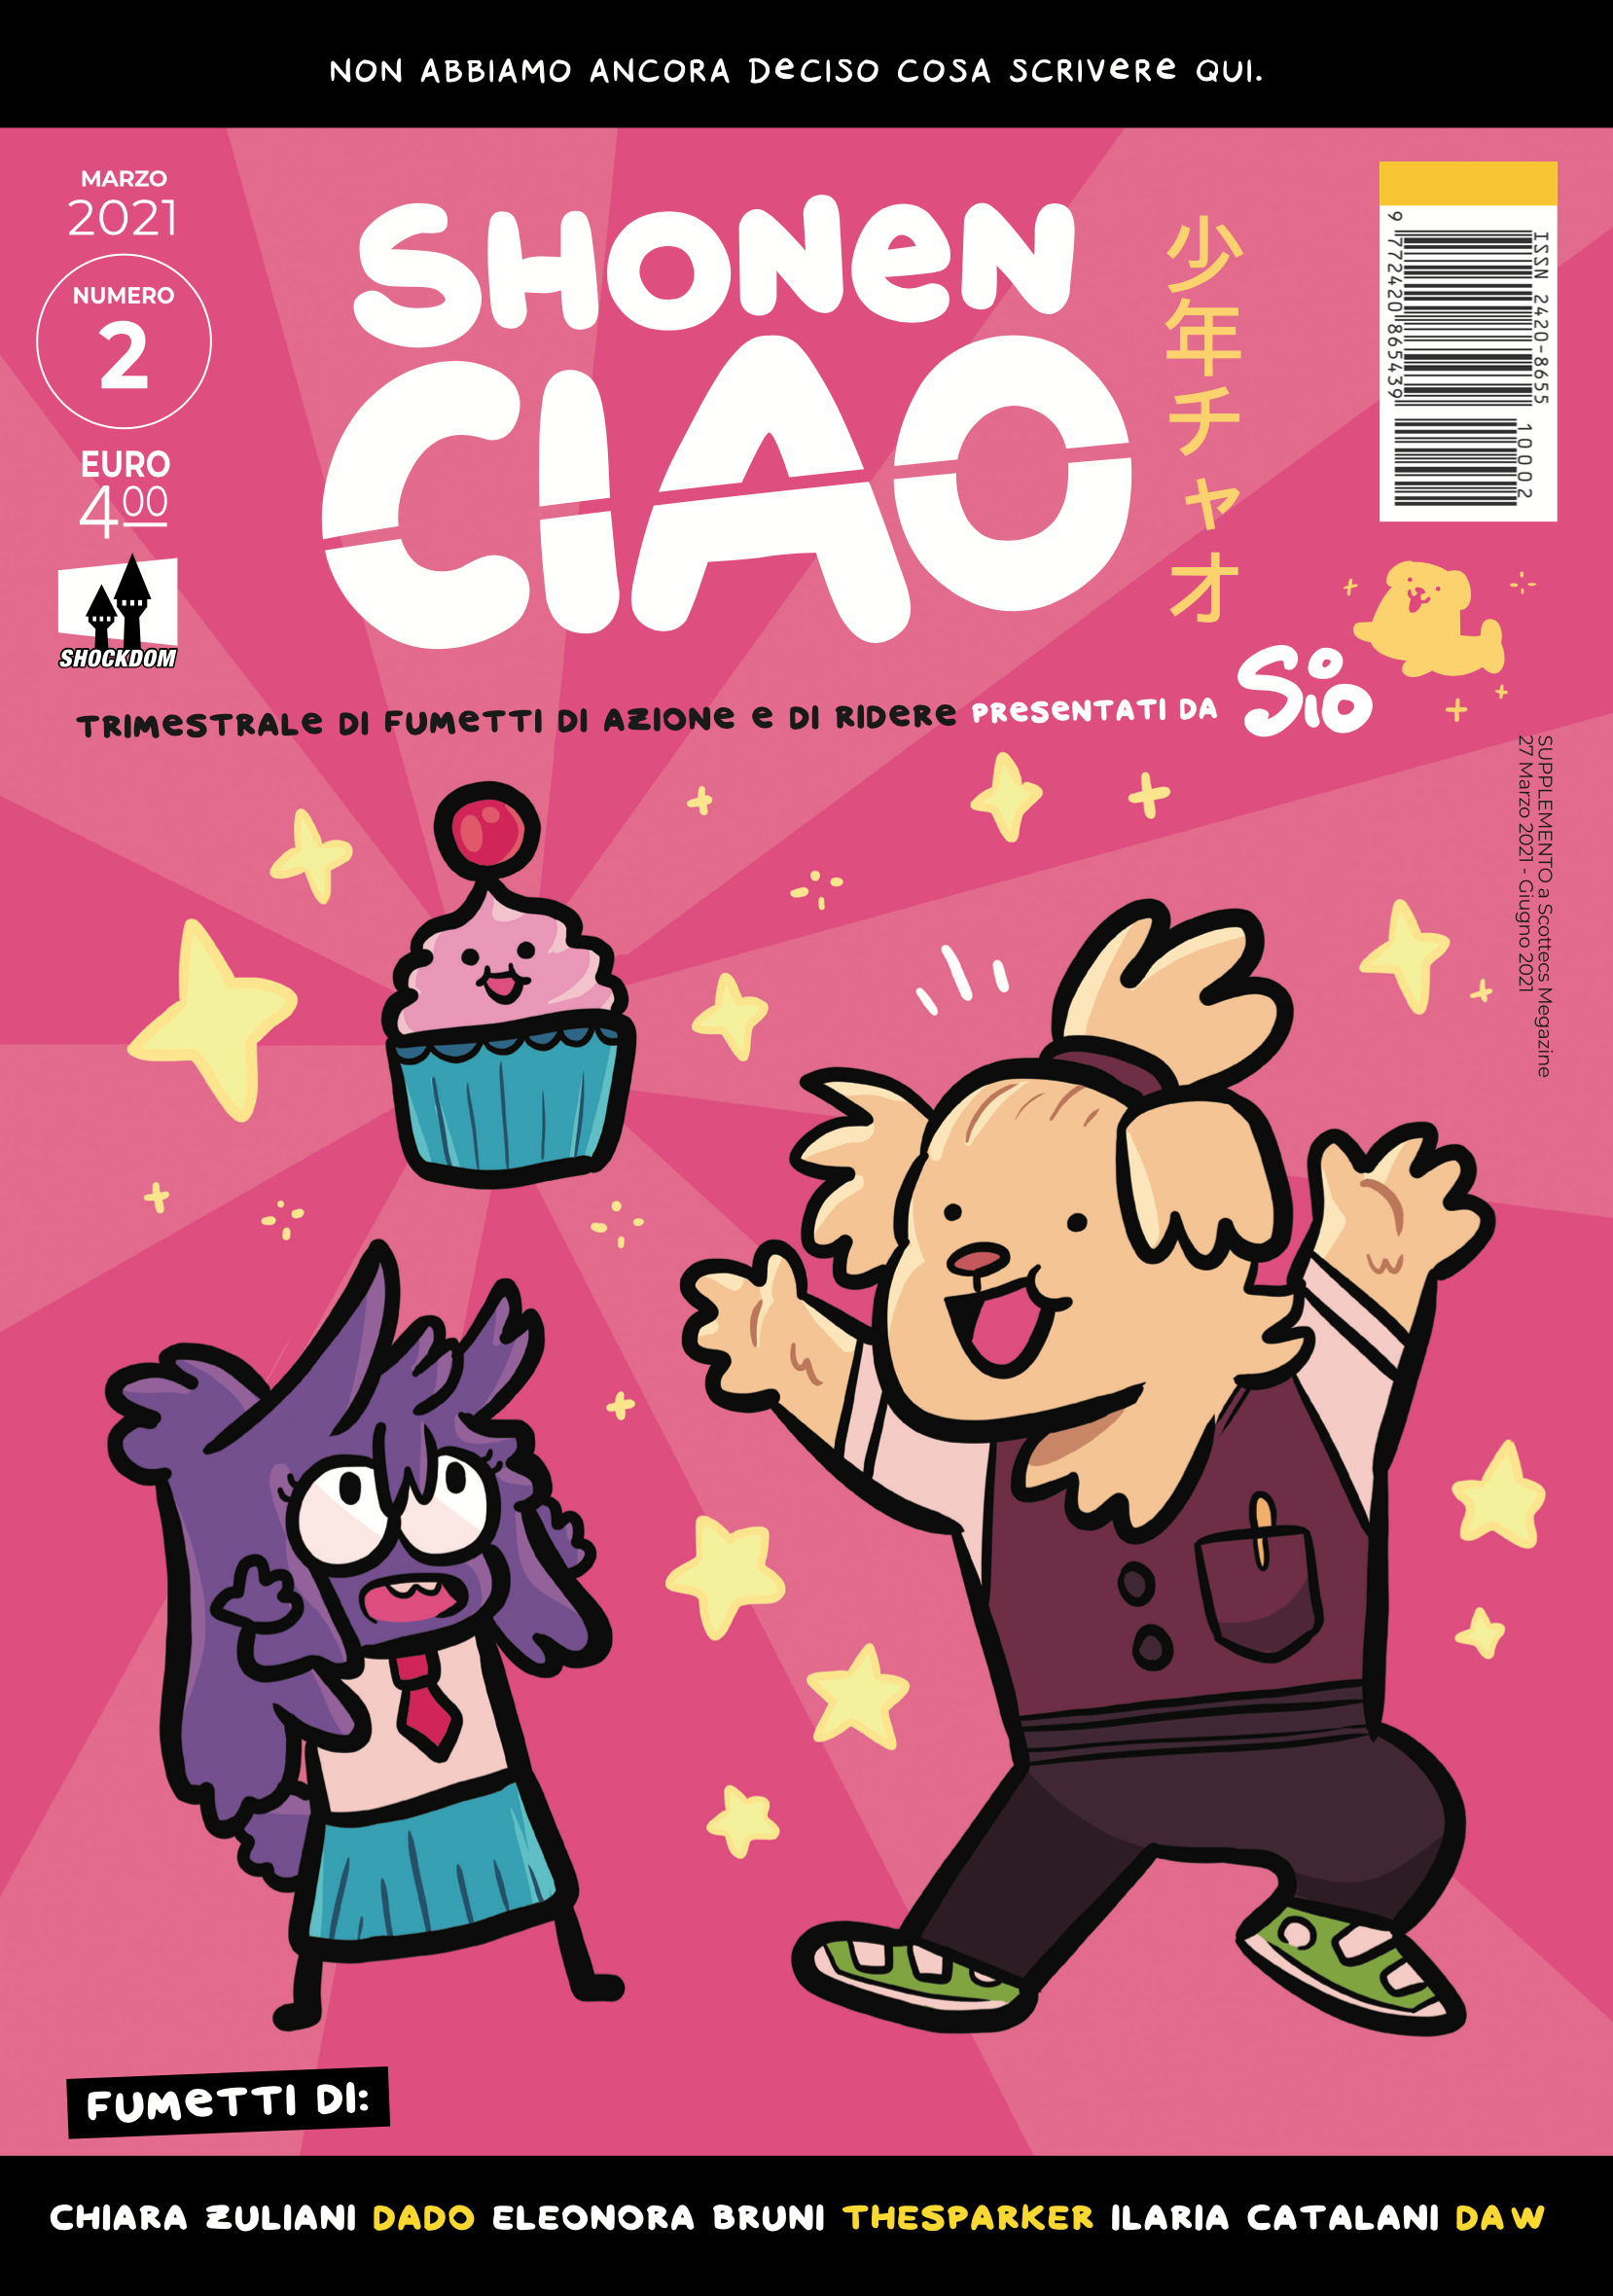 SC Shonen Ciao COVER 2.png